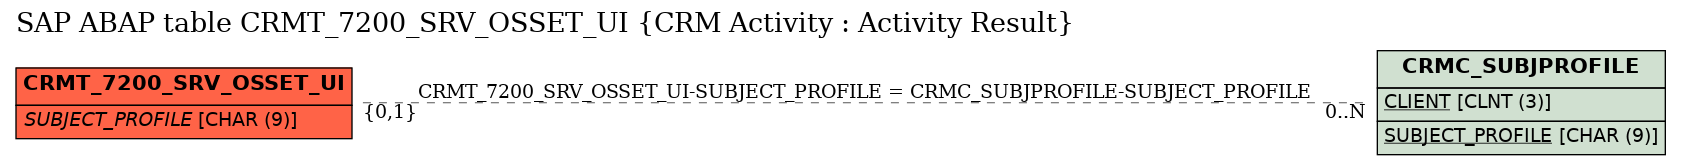 E-R Diagram for table CRMT_7200_SRV_OSSET_UI (CRM Activity : Activity Result)